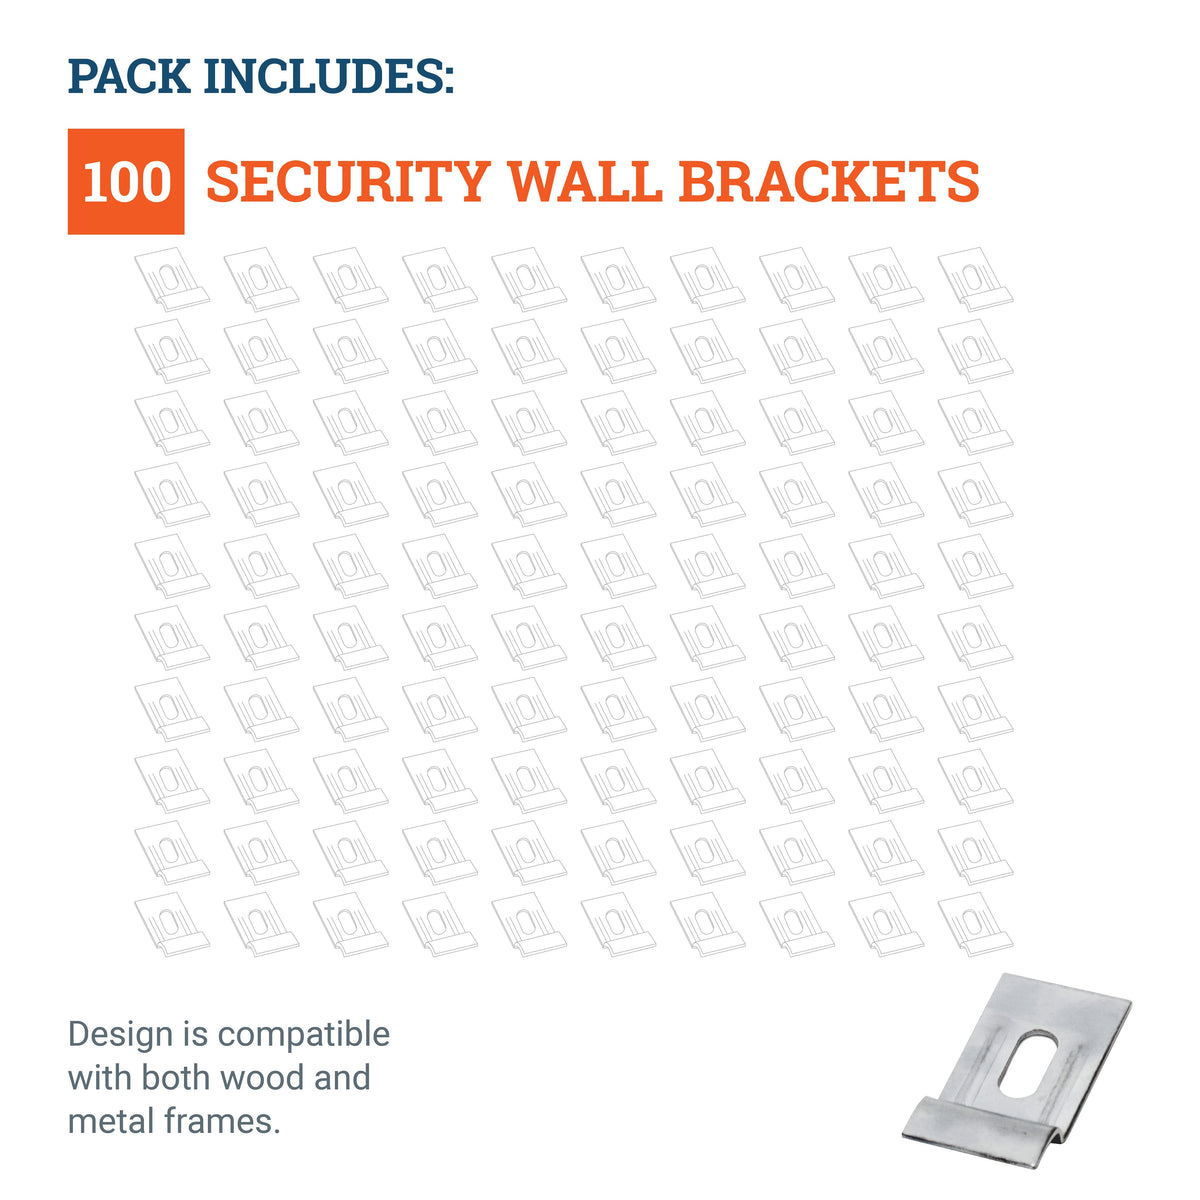 Security Wall Bracket - 100 Pack ($0.17 Each)